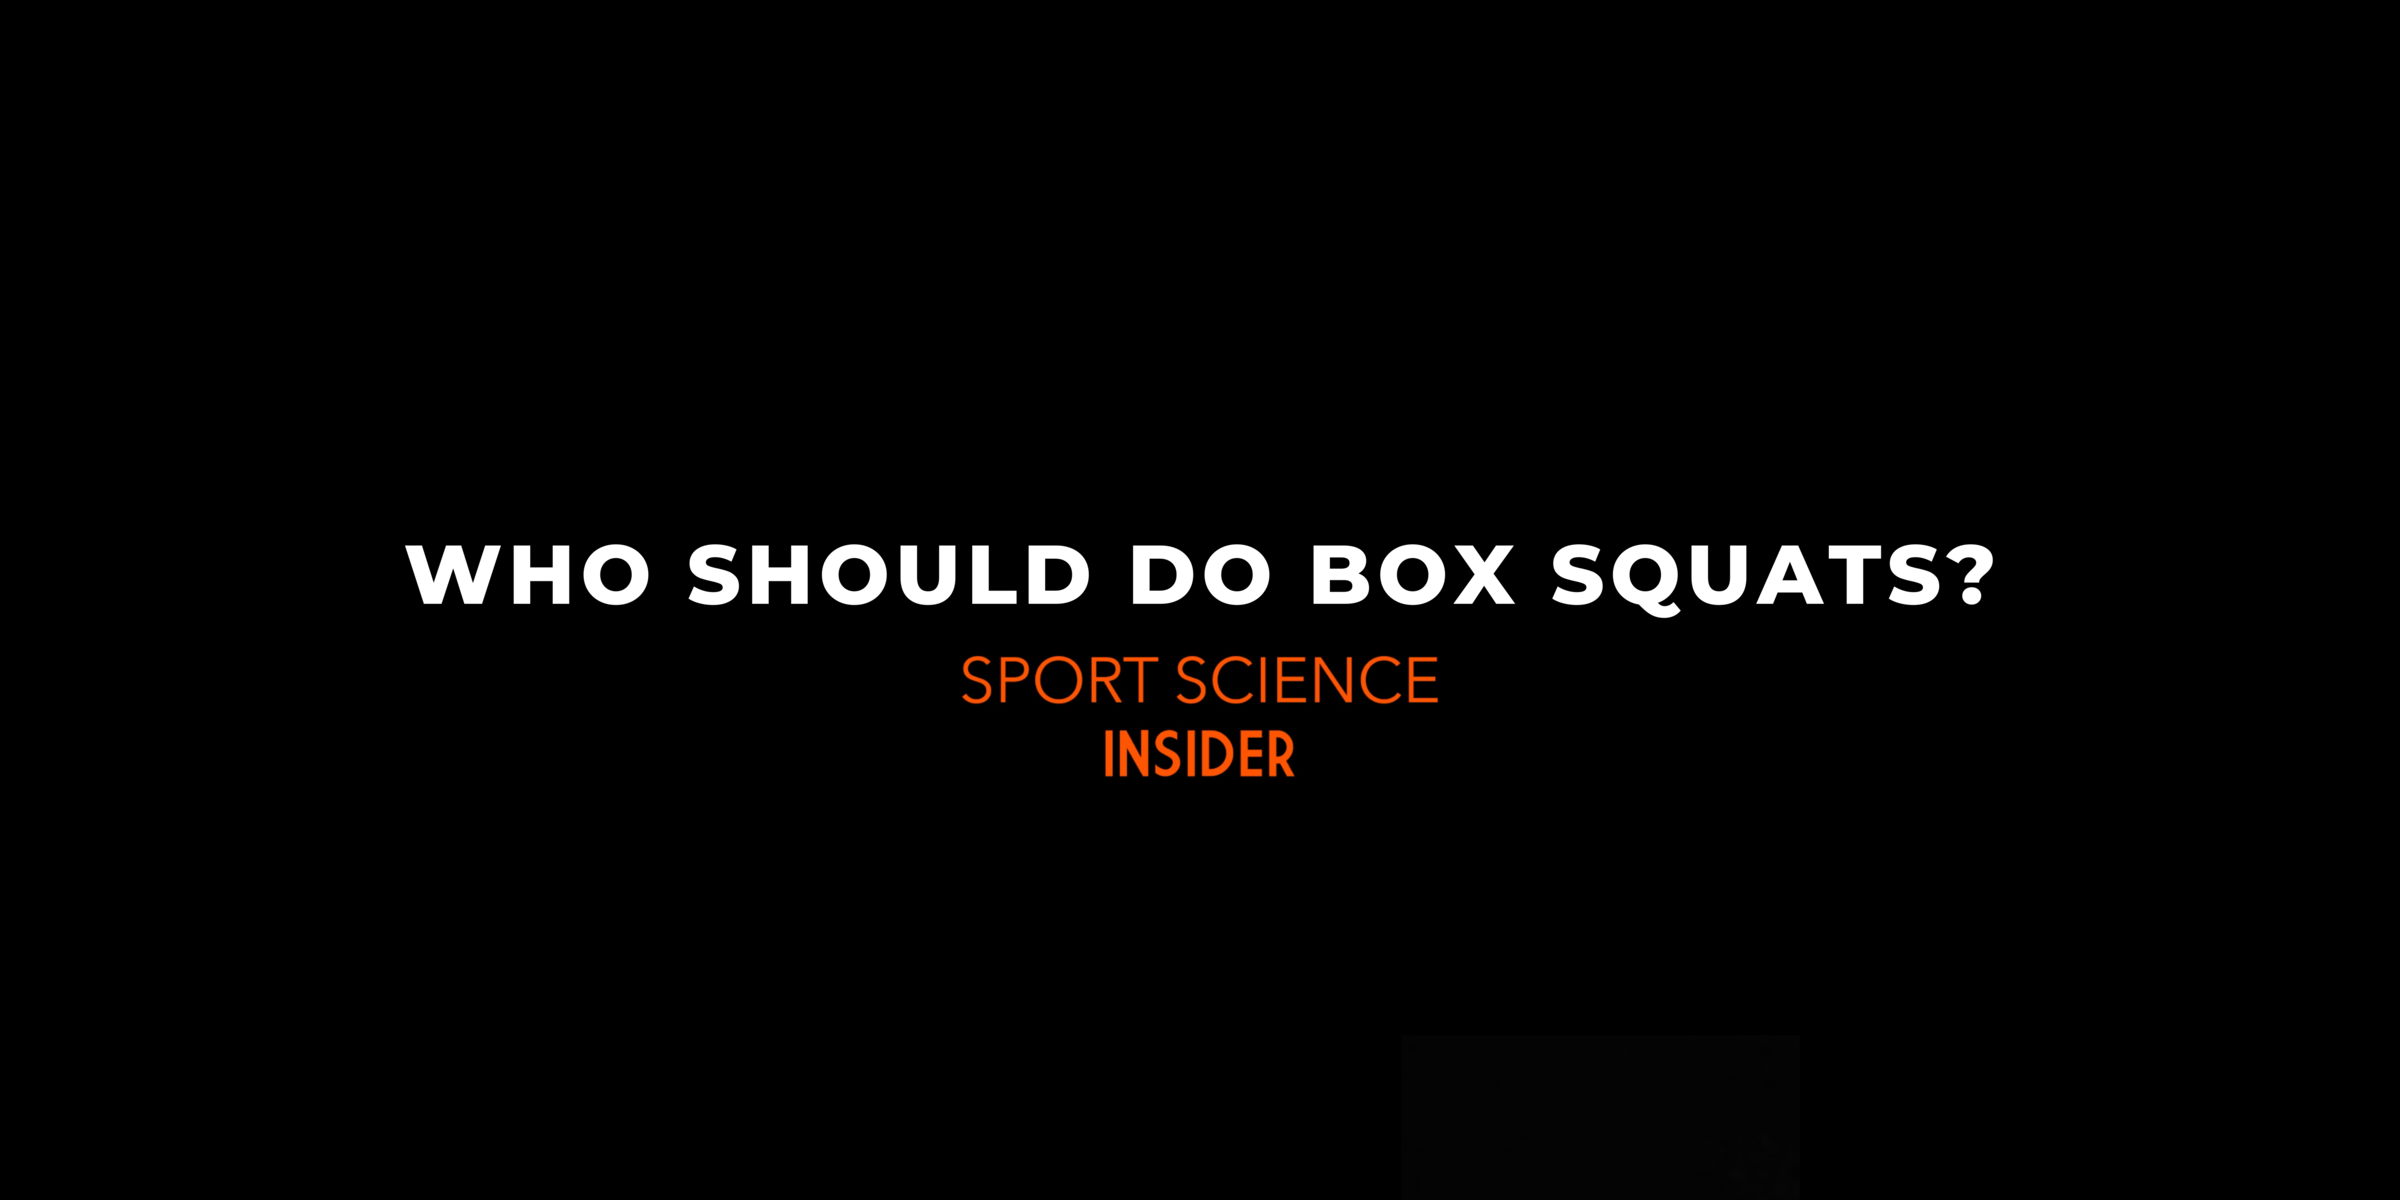 Who should do box squats?